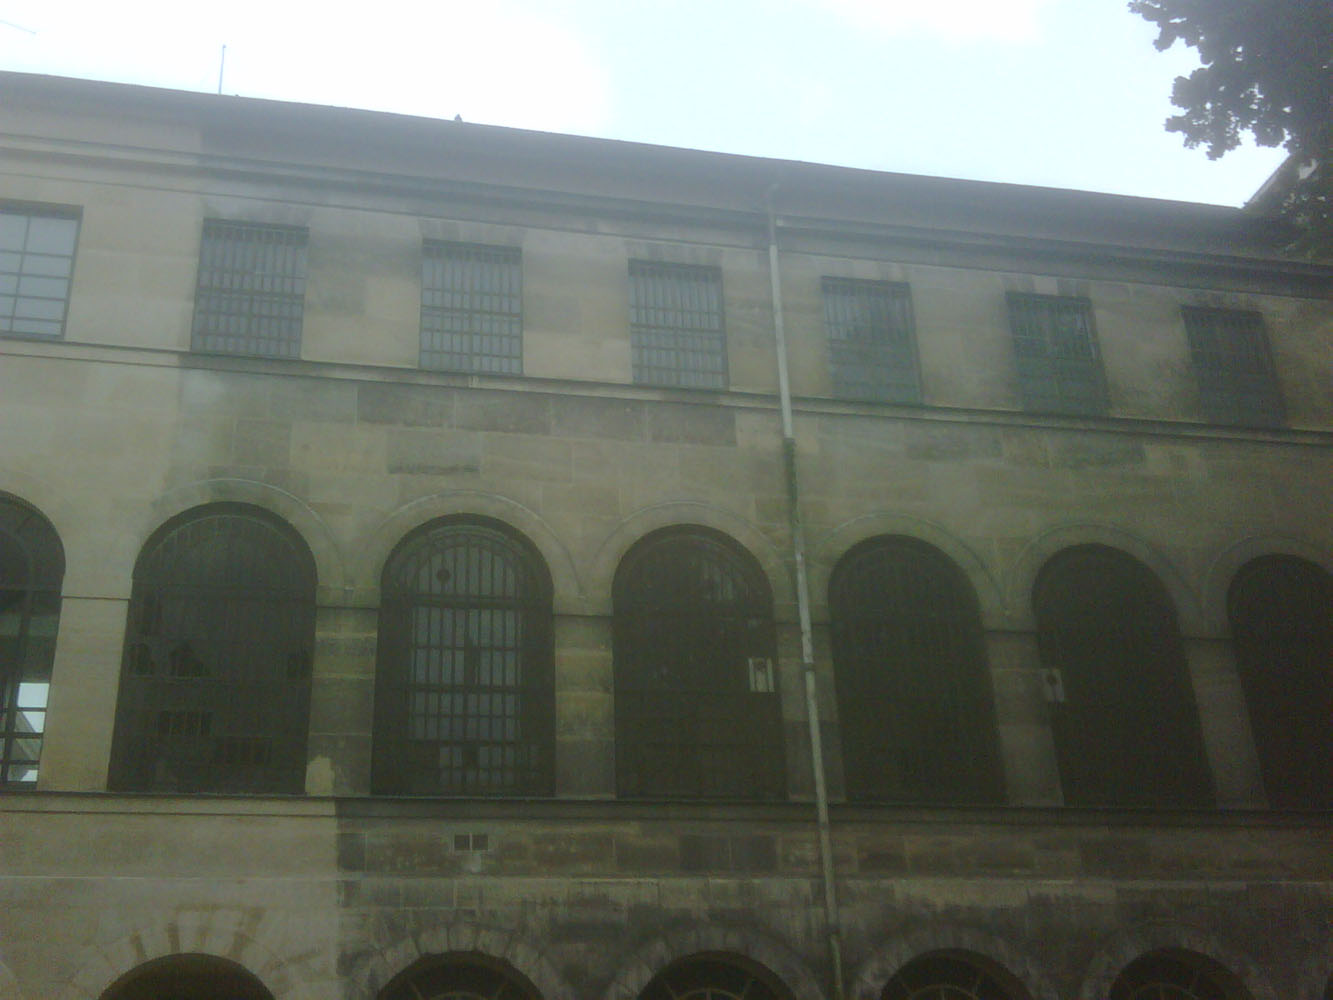 Prison Saint-Lazare, infirmary wing